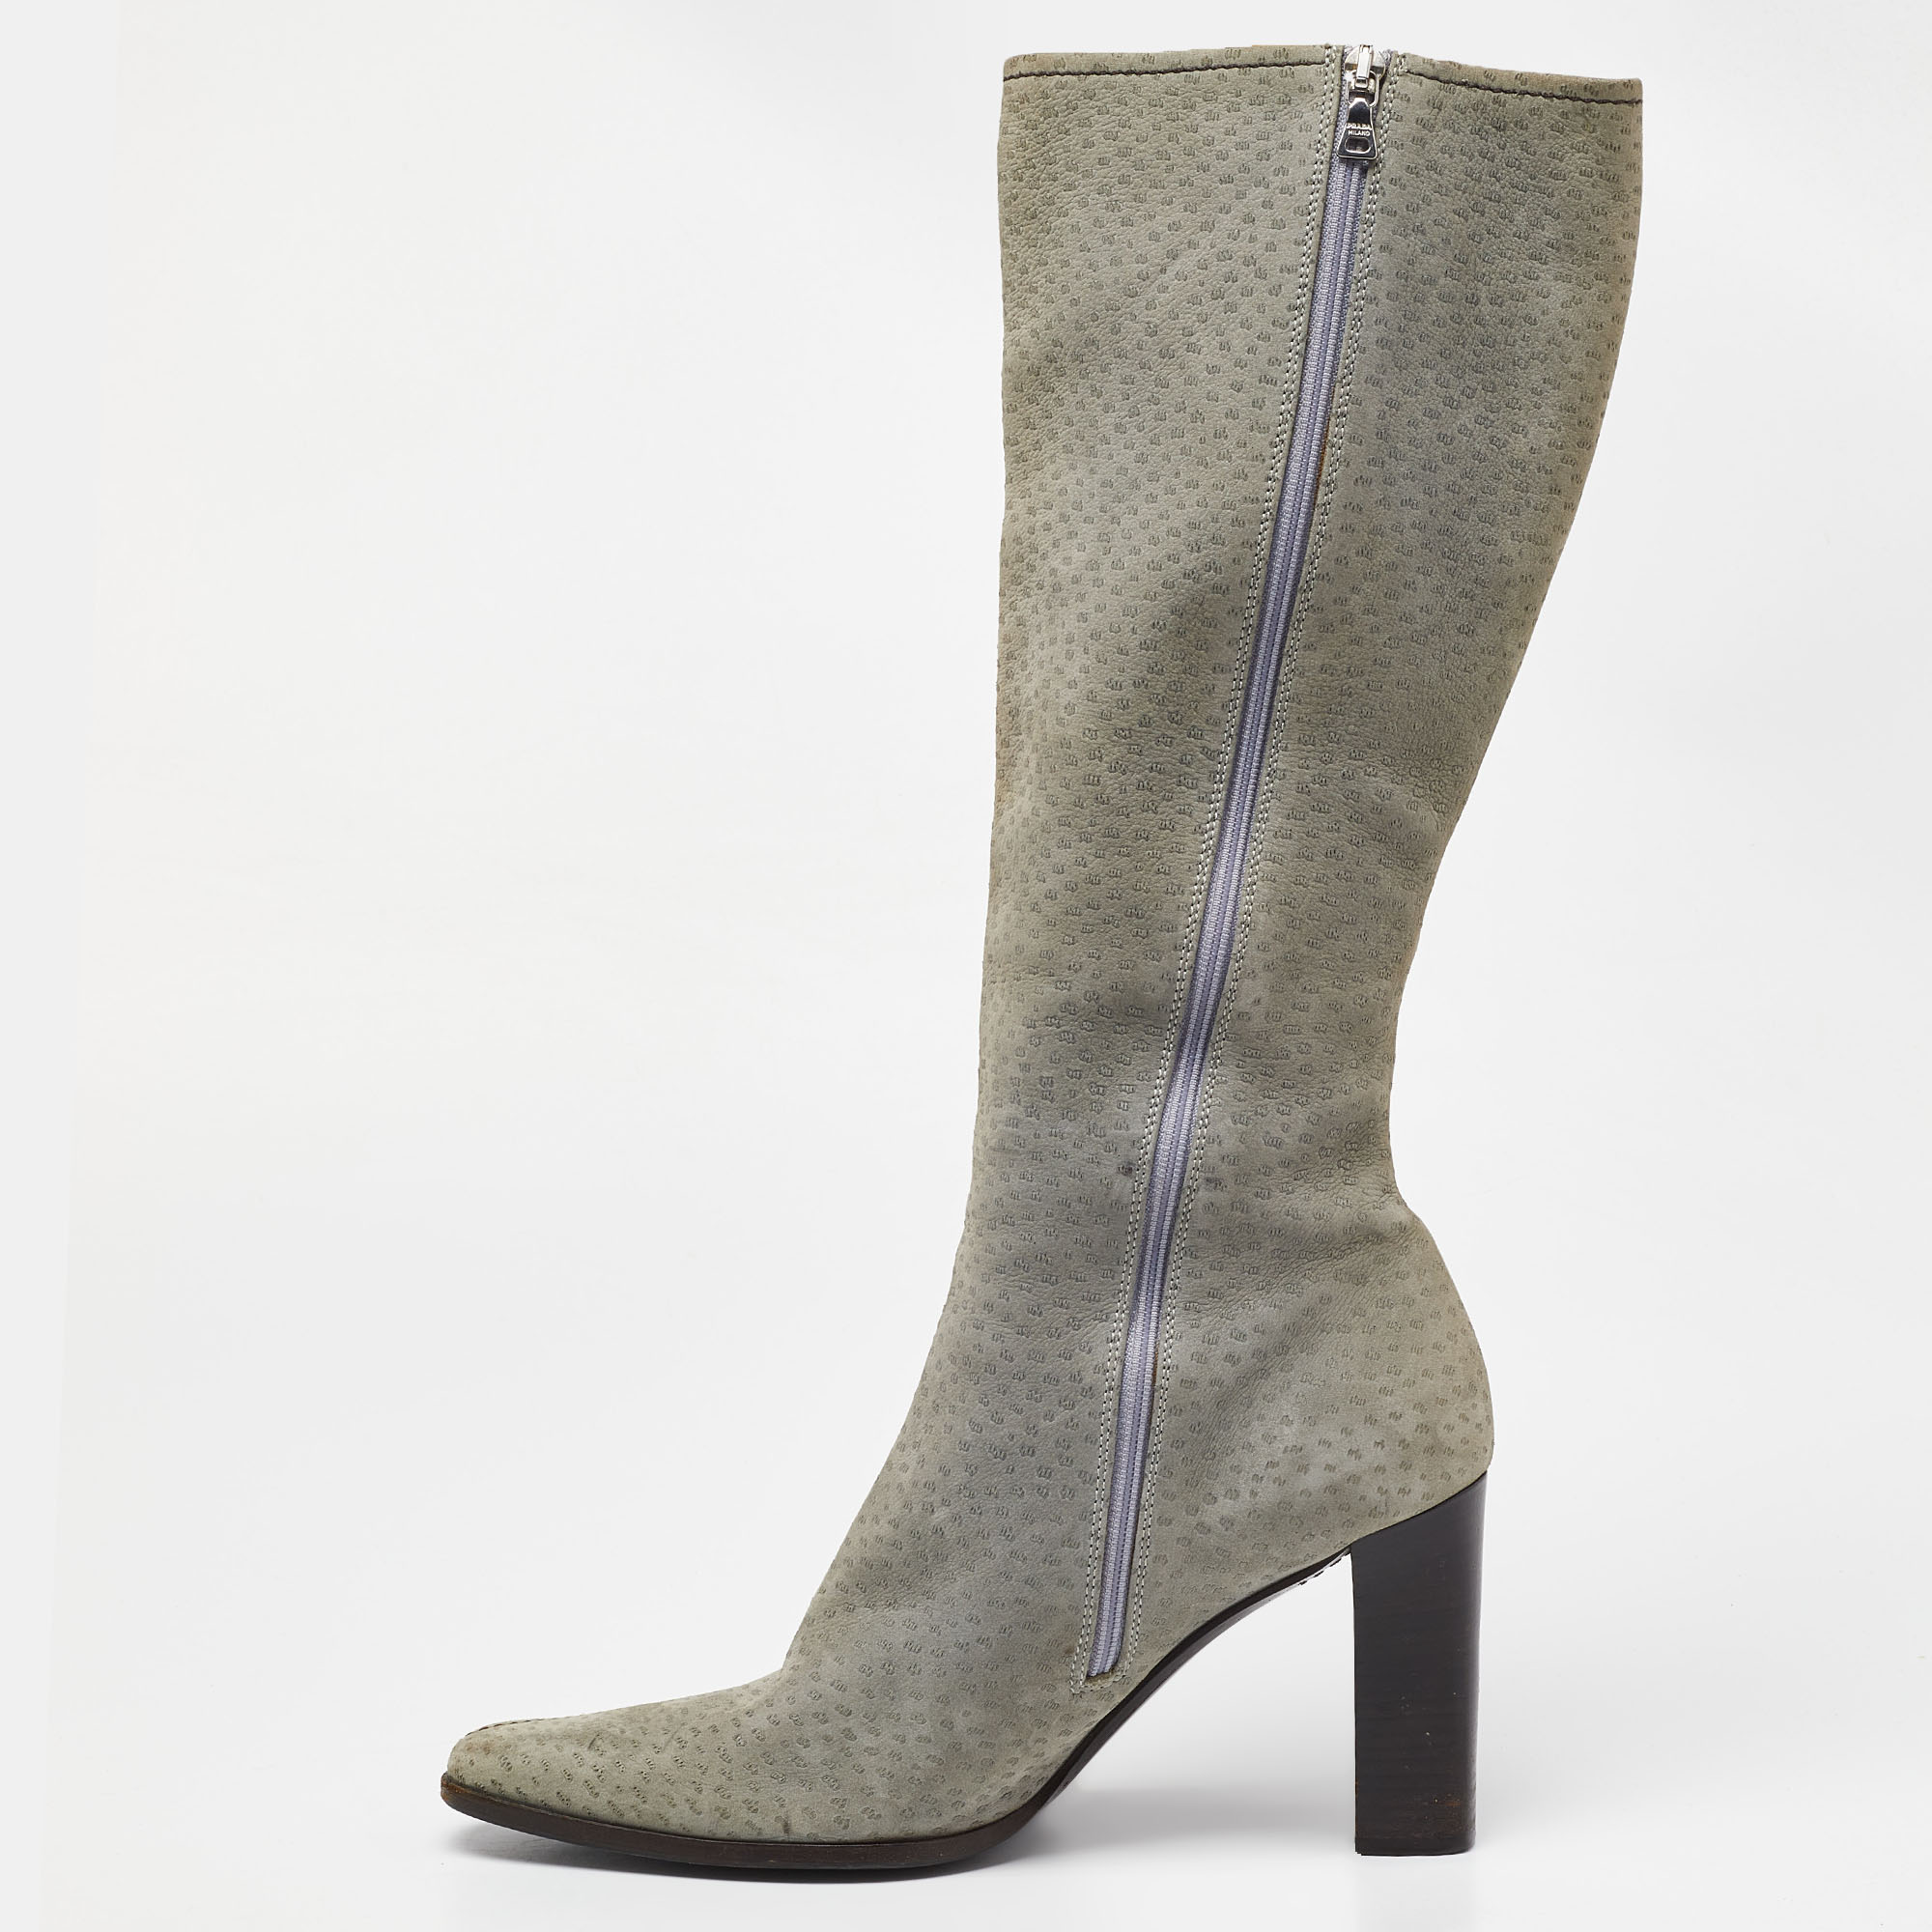 Prada dior grey textured nubuck leather knee length boots size 40